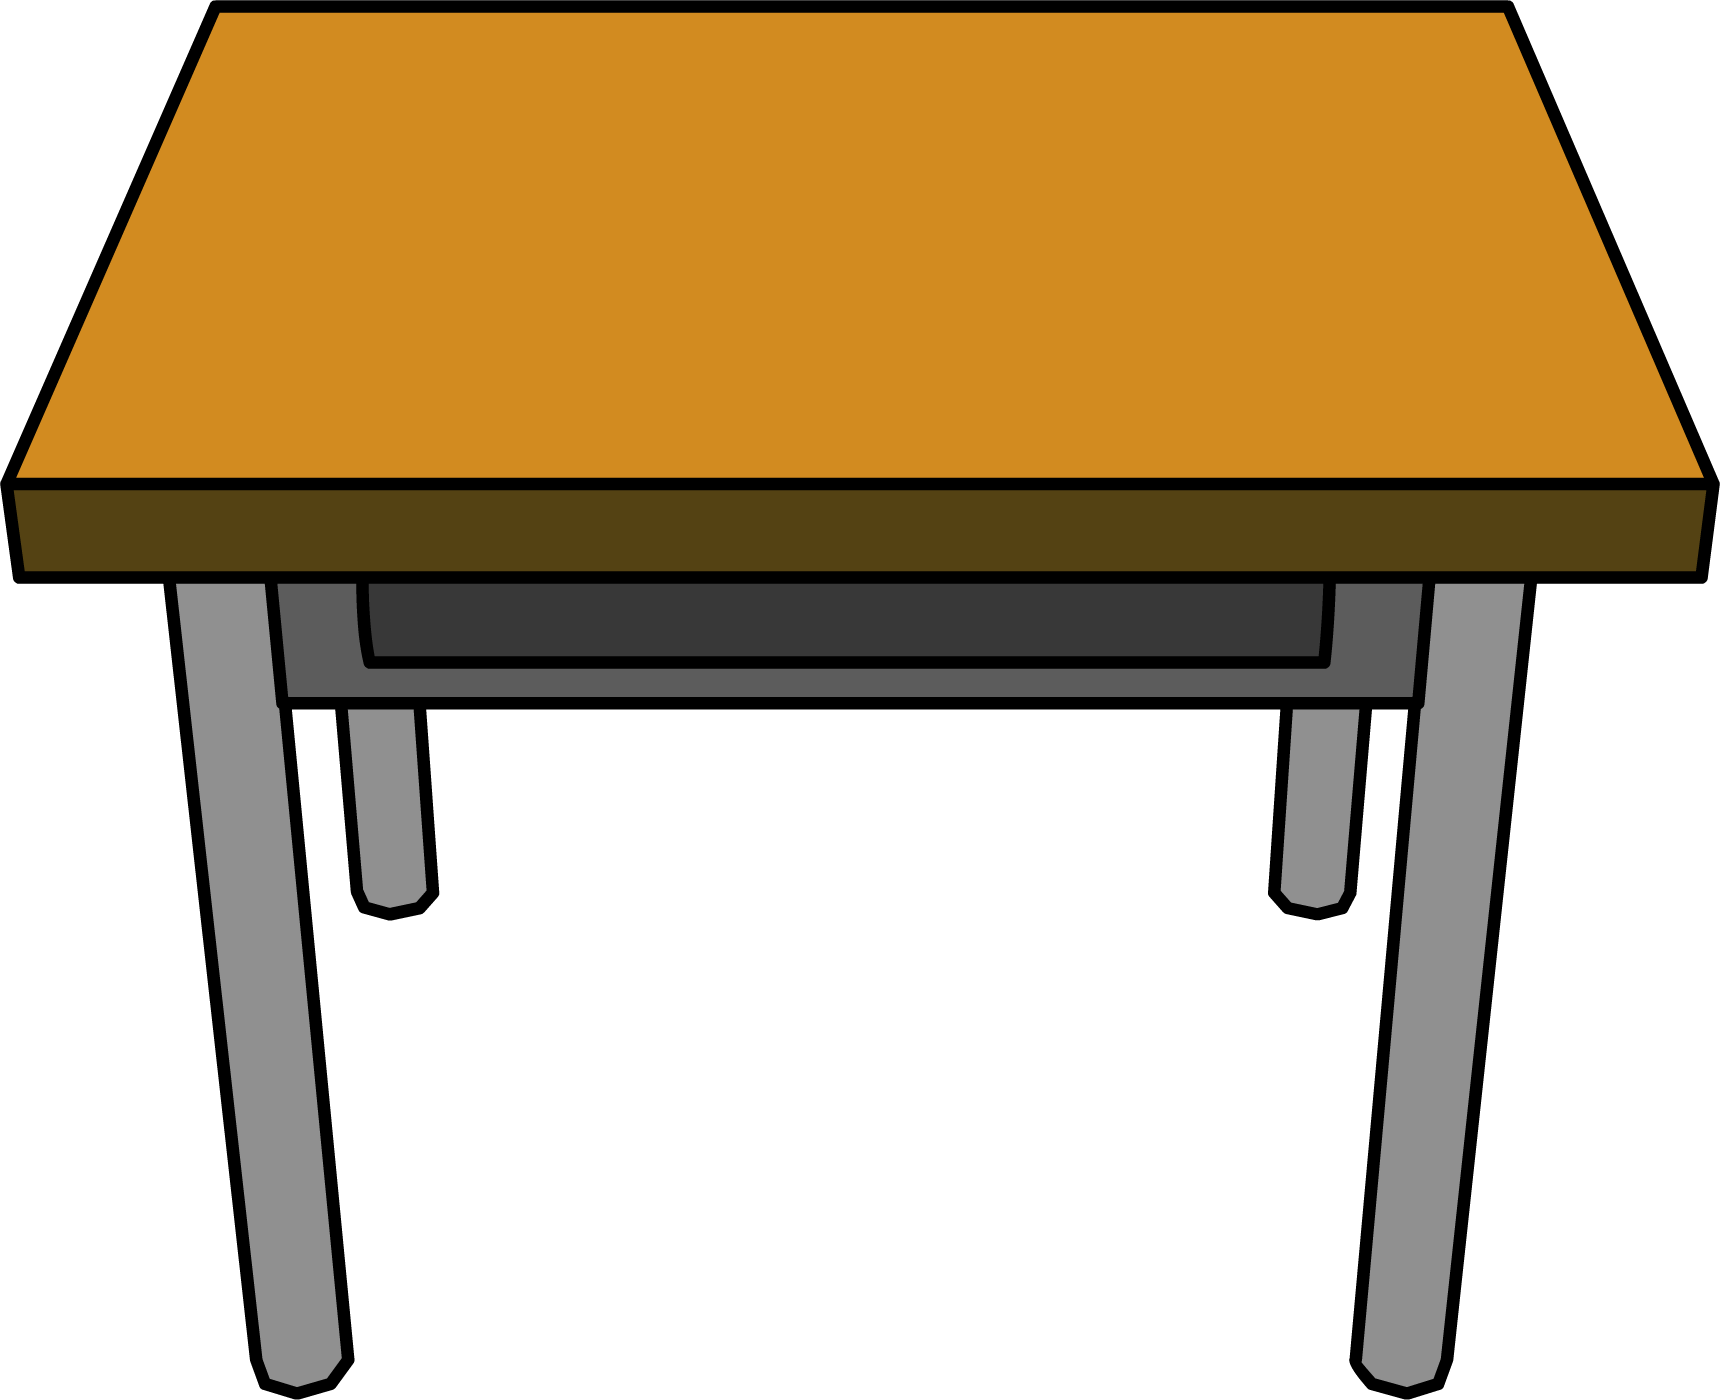 Classroom Desk | Club Penguin Wiki | FANDOM powered by Wikia